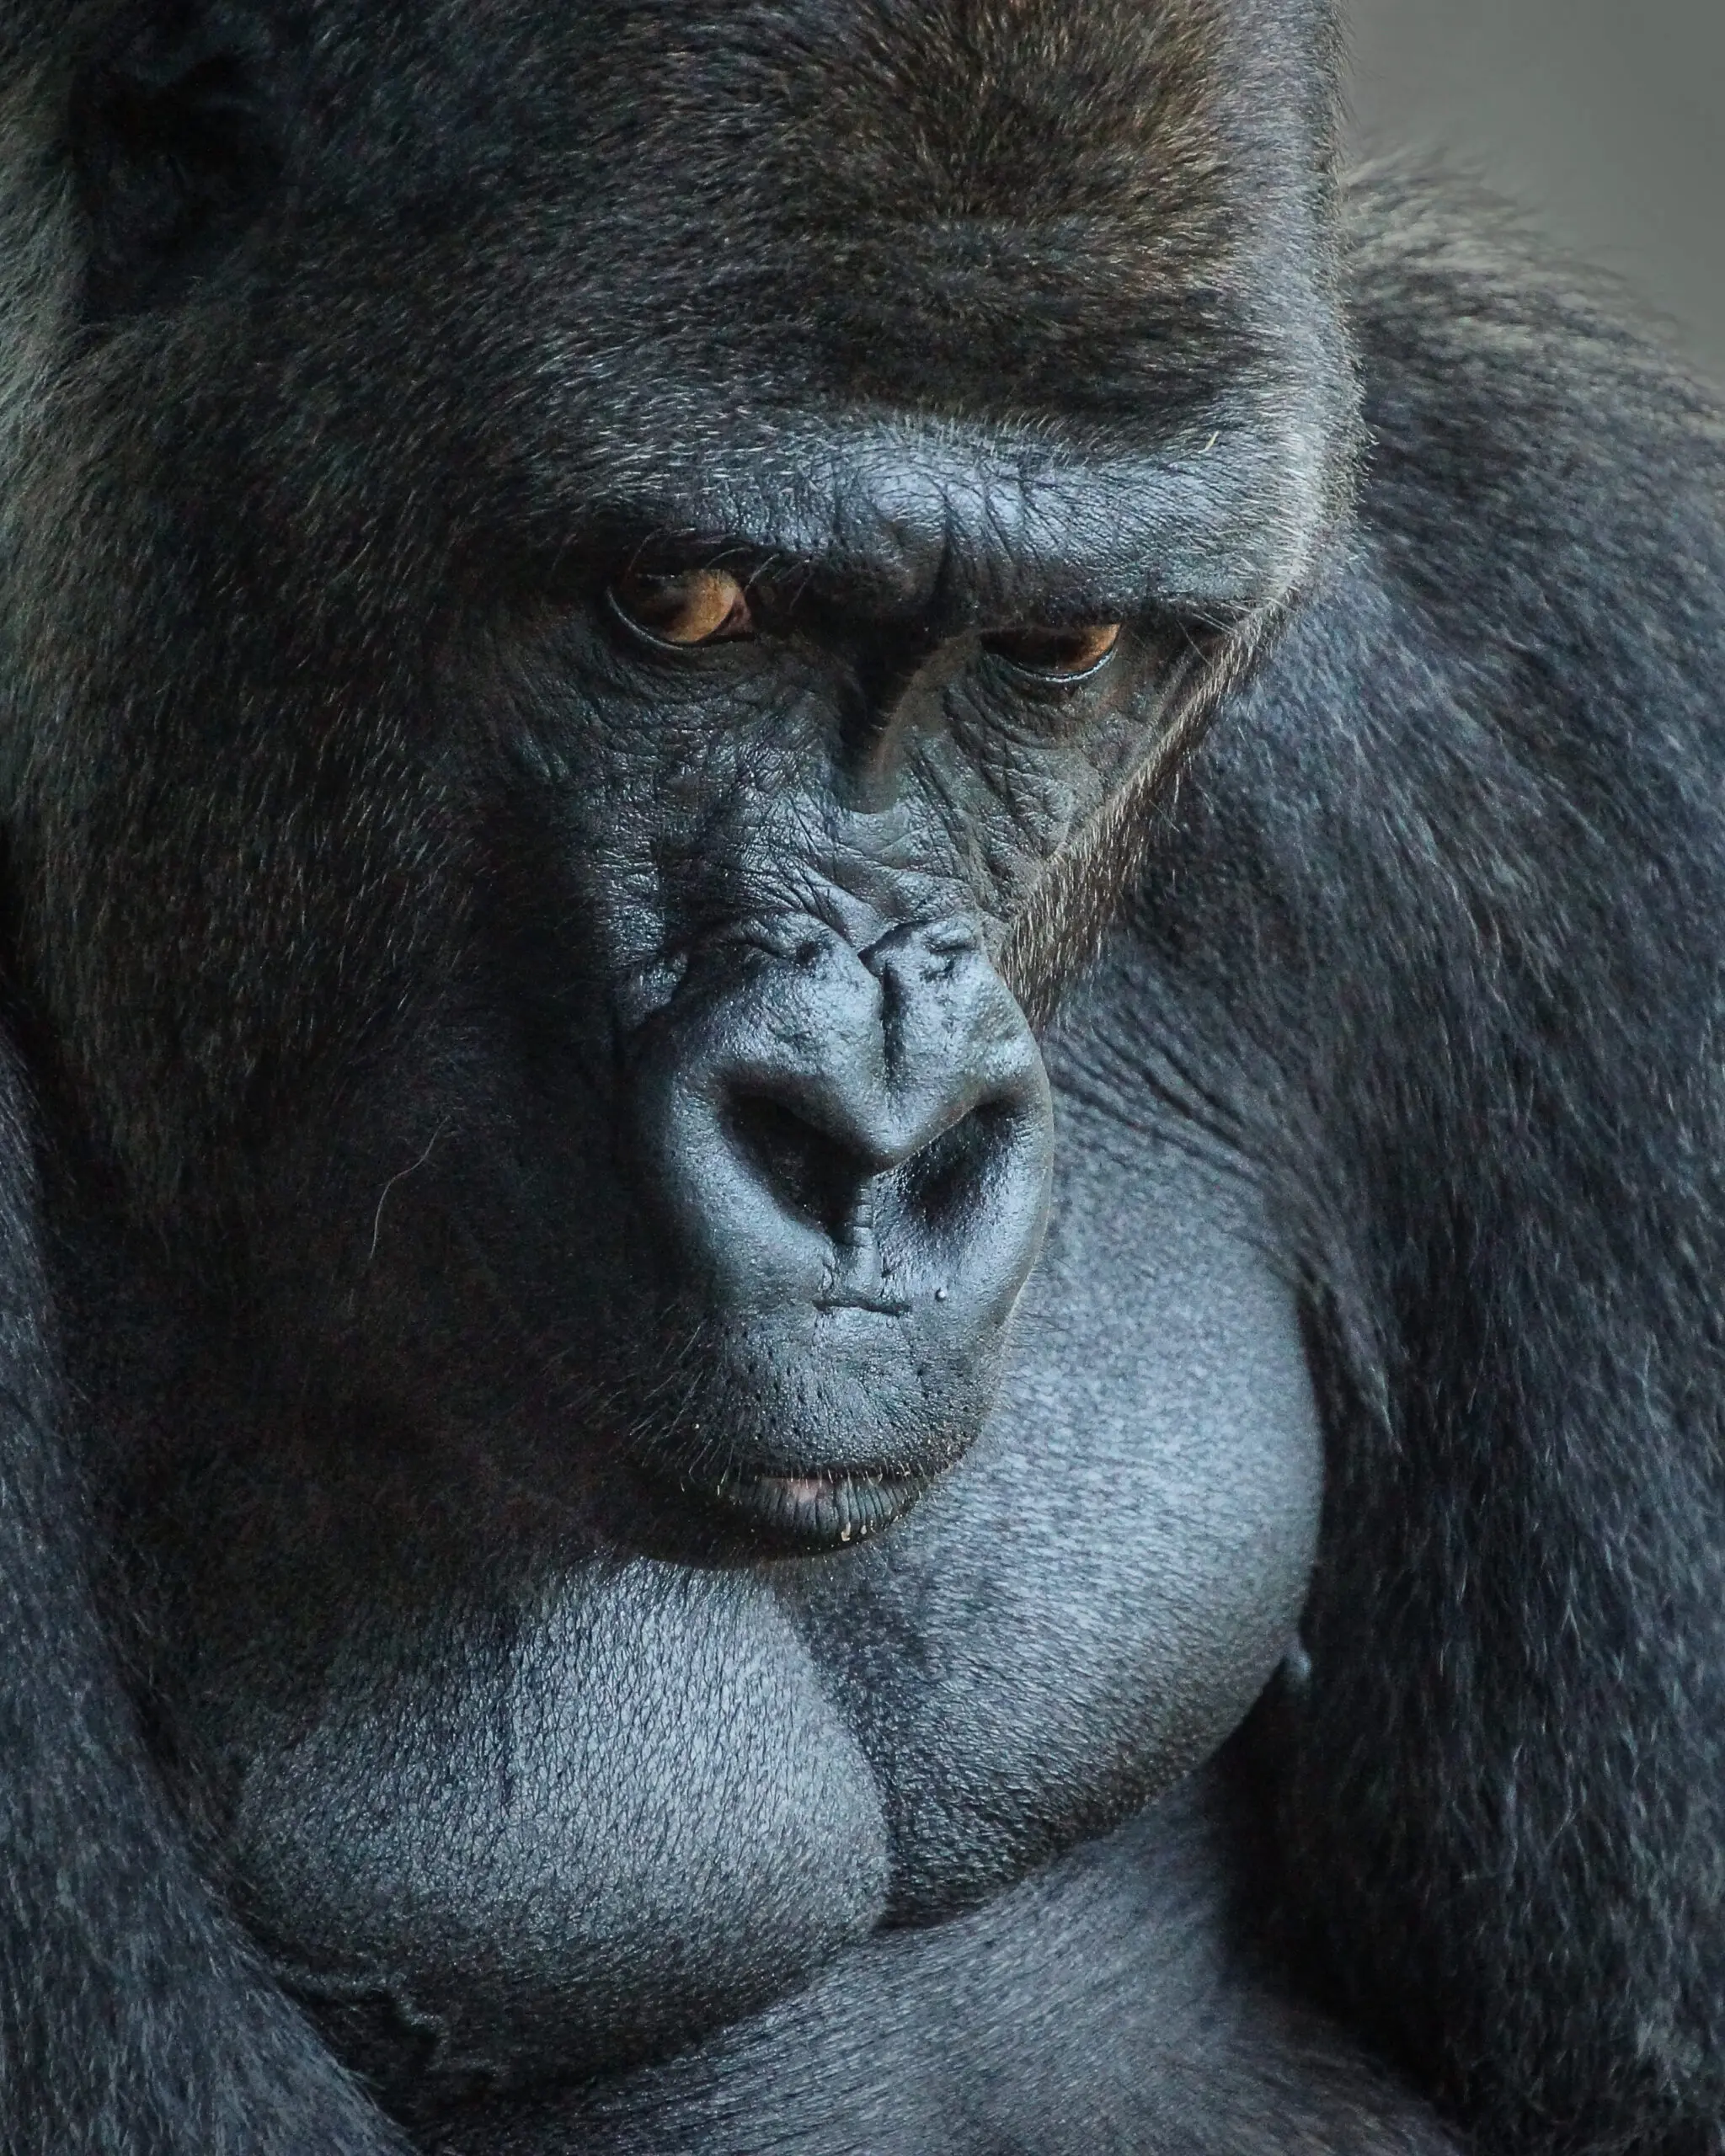 Wandbild (6385) Unhappy Gorilla by Bill Mugg, 1x.com präsentiert: Kreatives,Tiere,Natur,Sonstige Tiere,Wildtiere,Aus Afrika